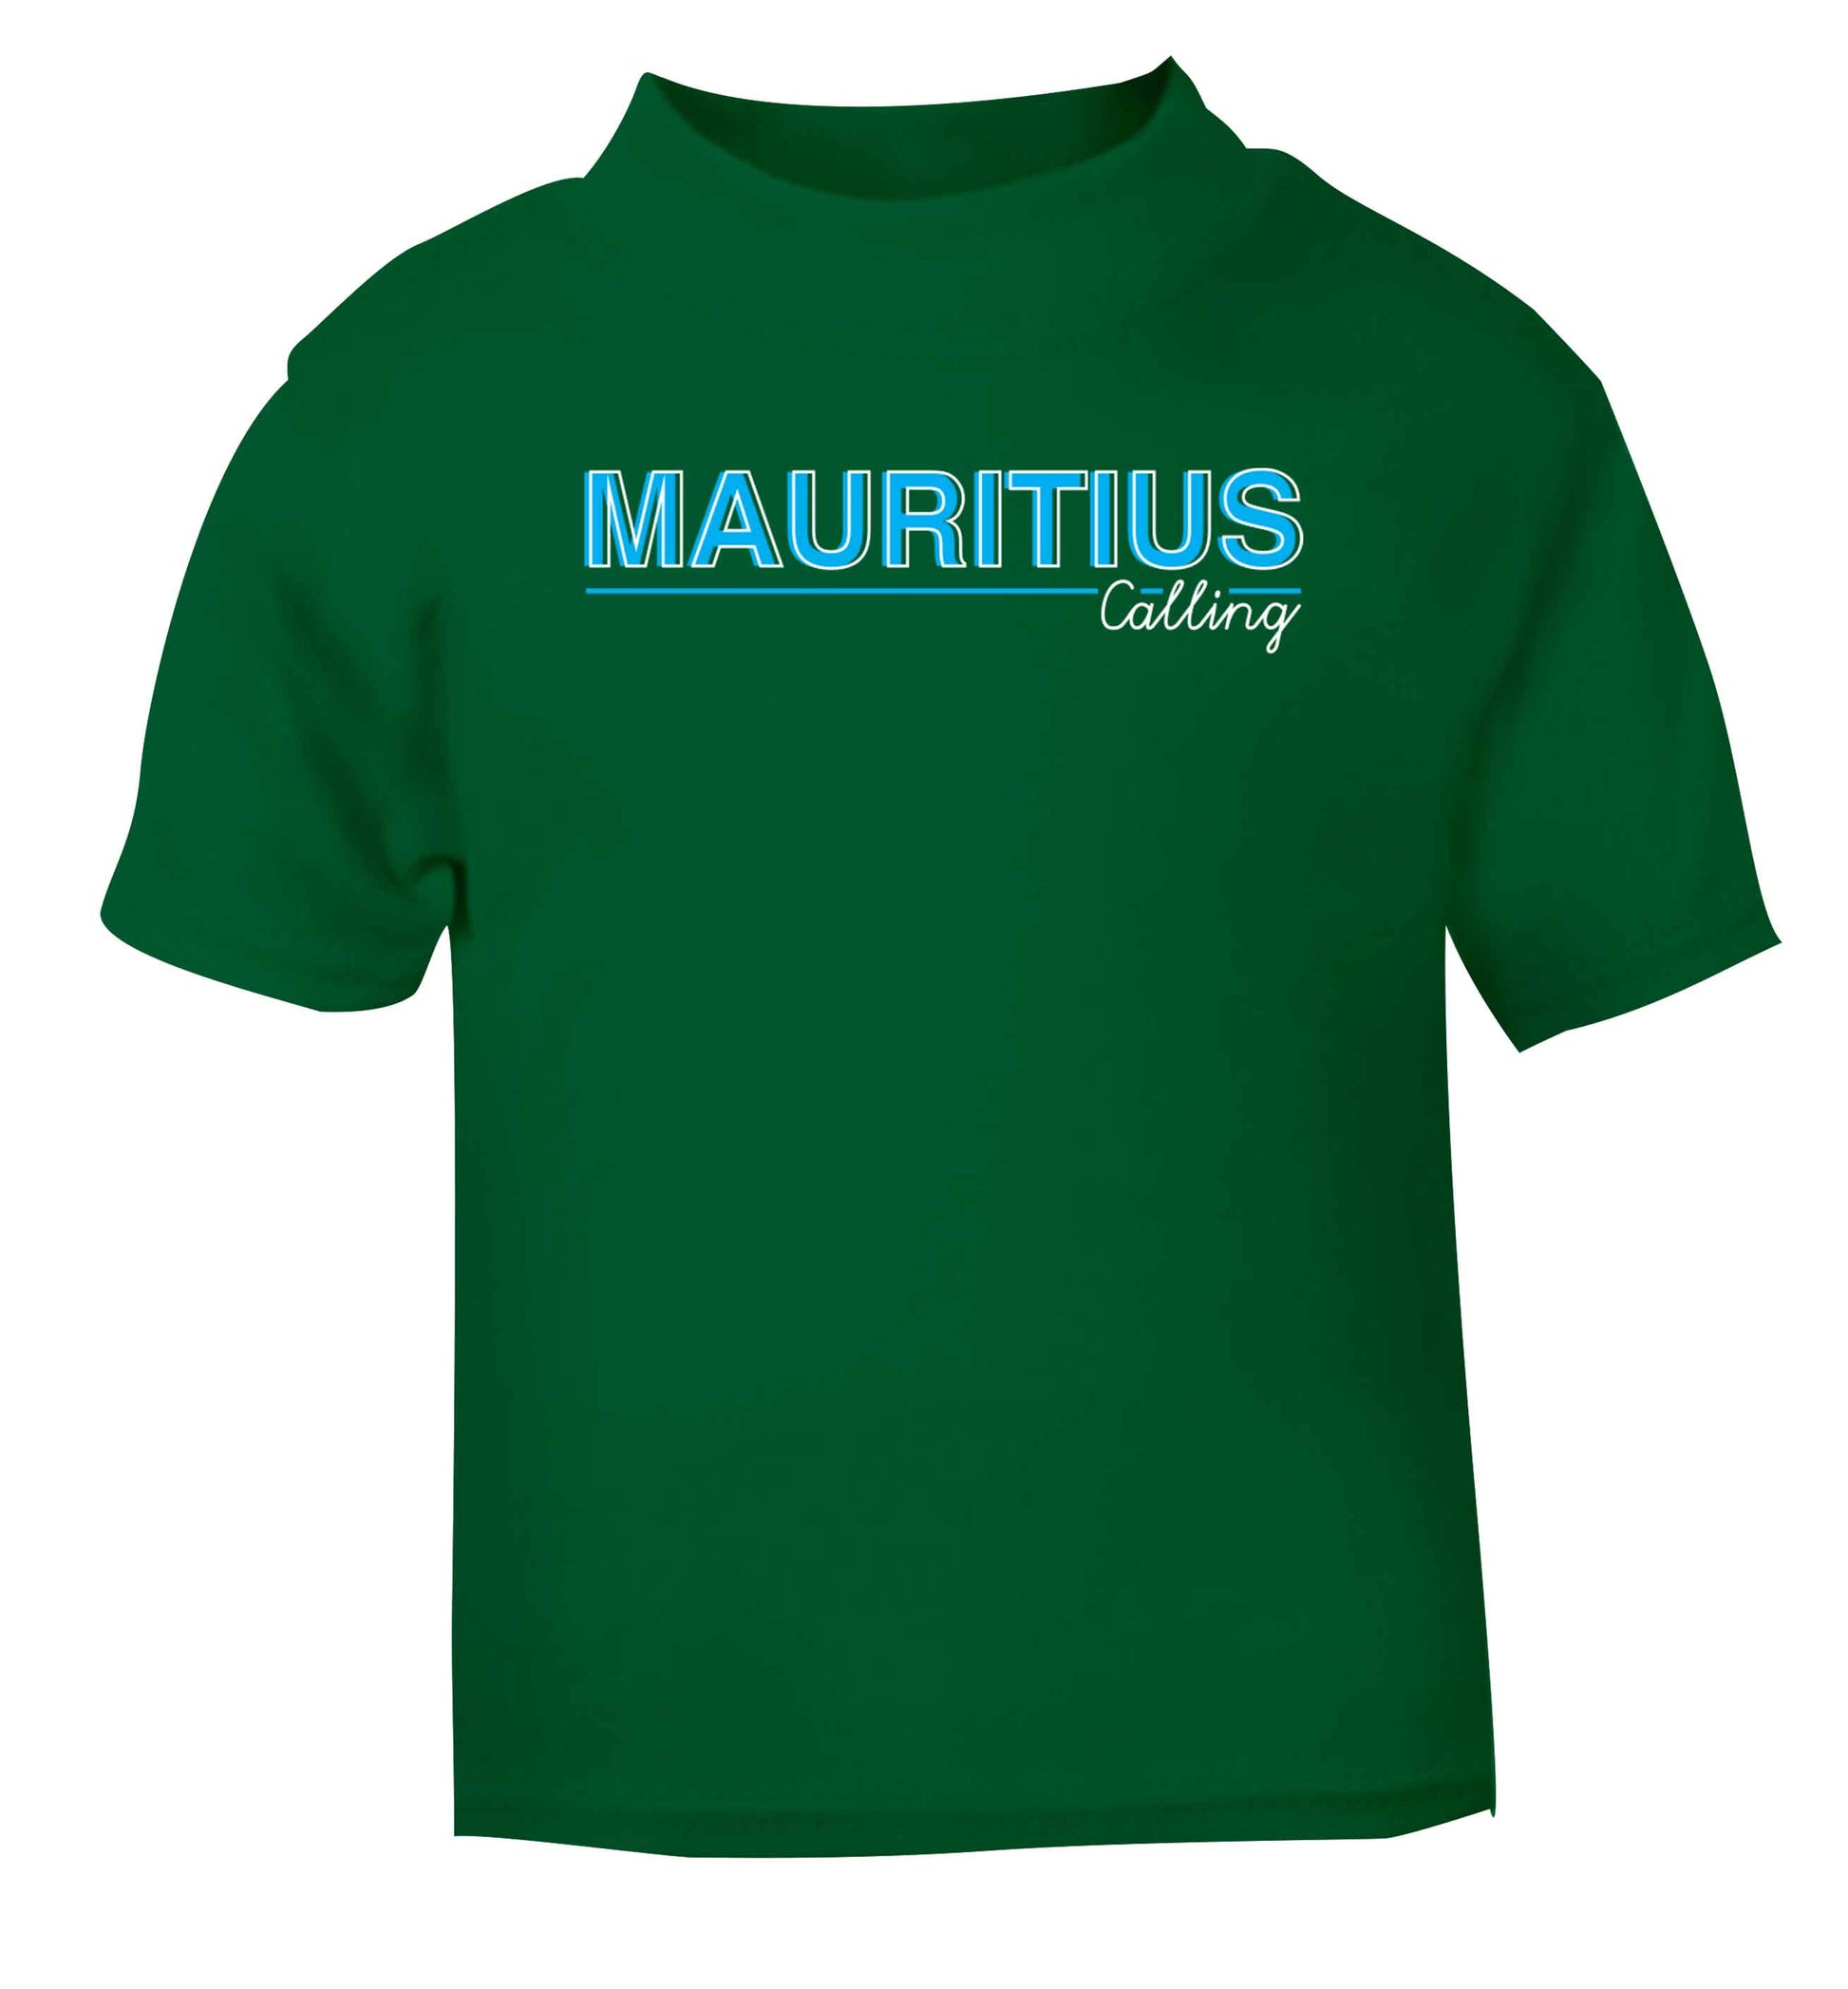 Mauritius calling green Baby Toddler Tshirt 2 Years